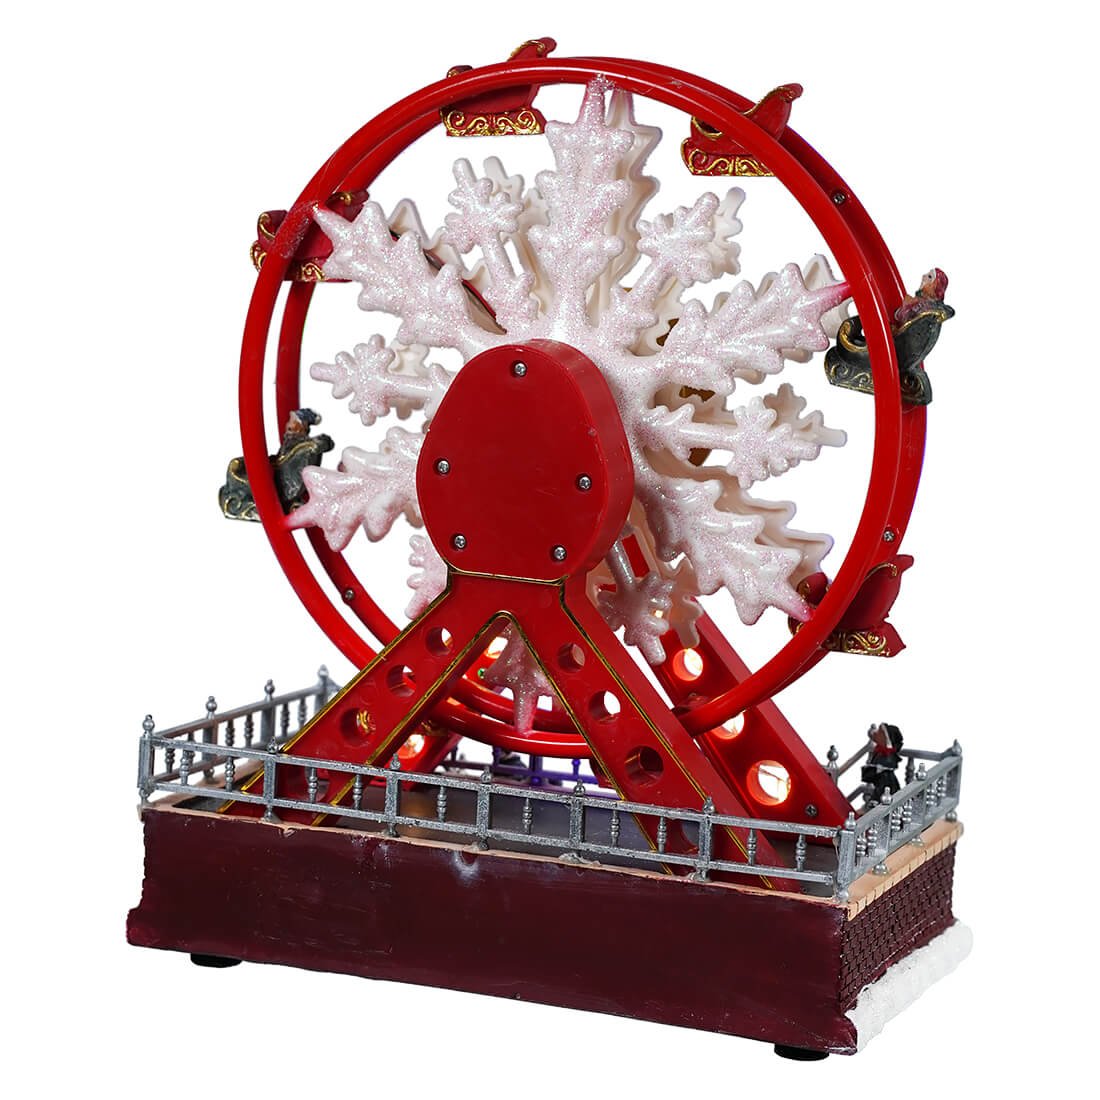 Lighted Christmas Animated Musical Ferris Wheel